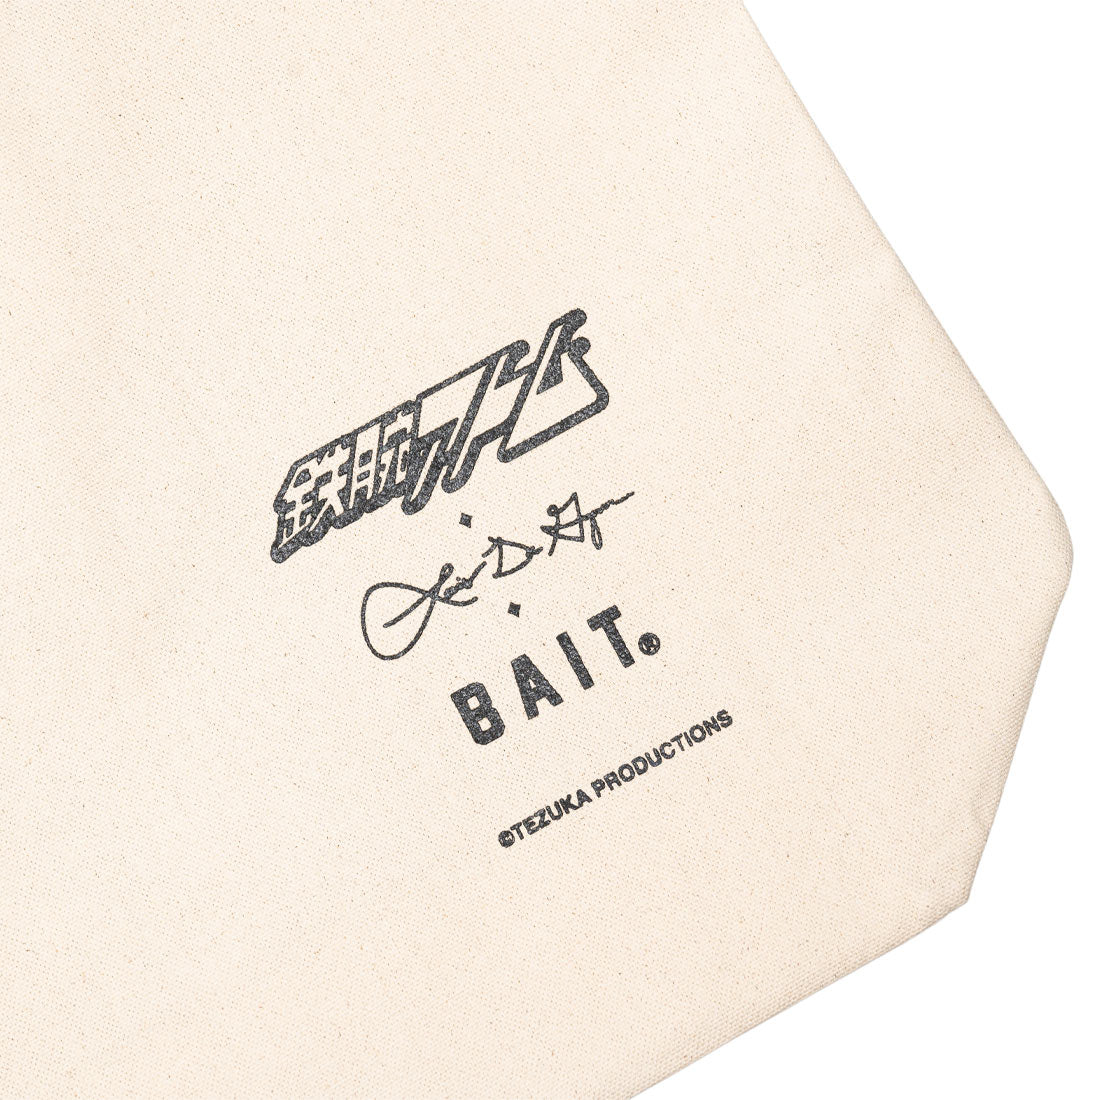 BAIT x Astro Boy x Louis de Guzman Tote Bag (white)